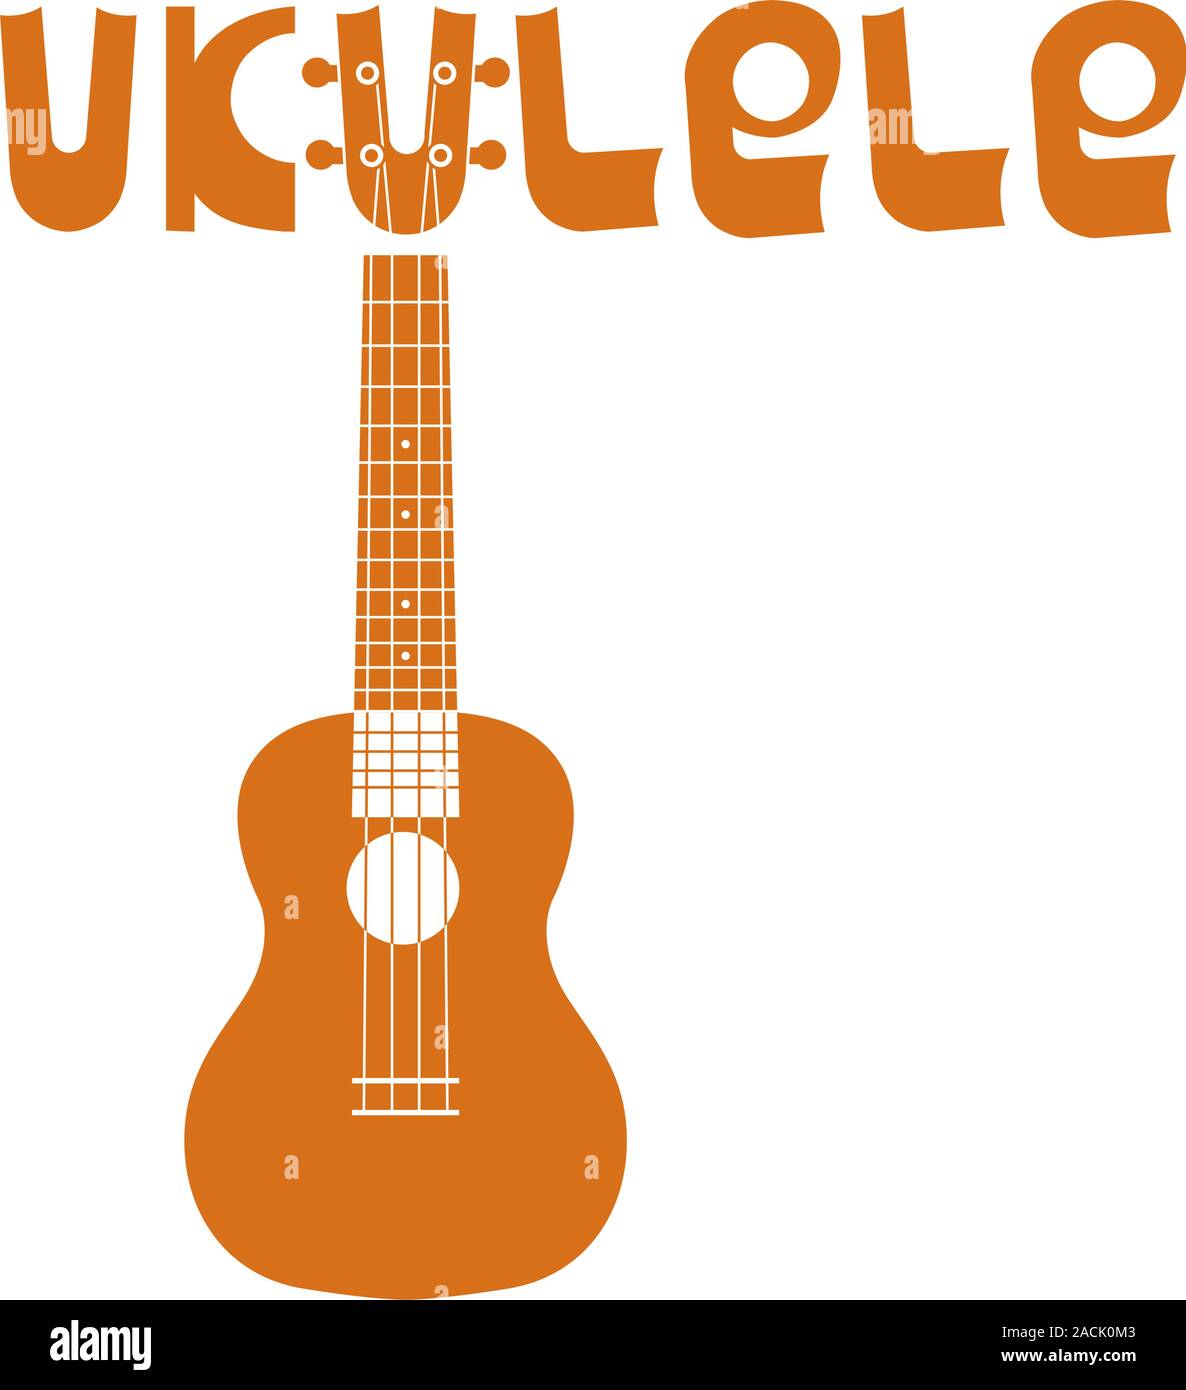 Ukulele Hawaiian guitar. Lettering of the word ukulele. String musical instrument. Simple brown vector illustration Stock Vector